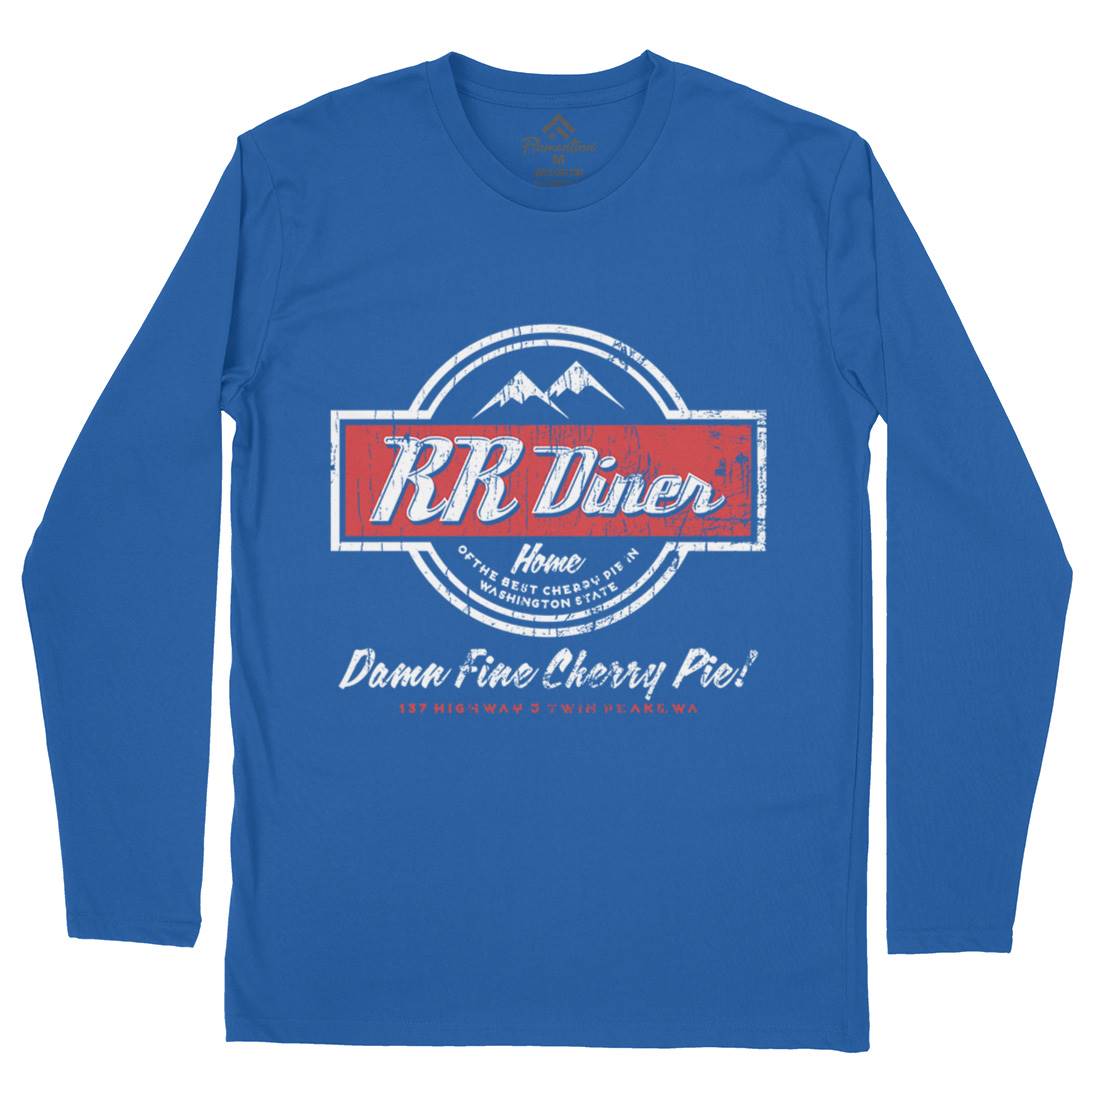 Double Rr Diner Mens Long Sleeve T-Shirt Horror D335